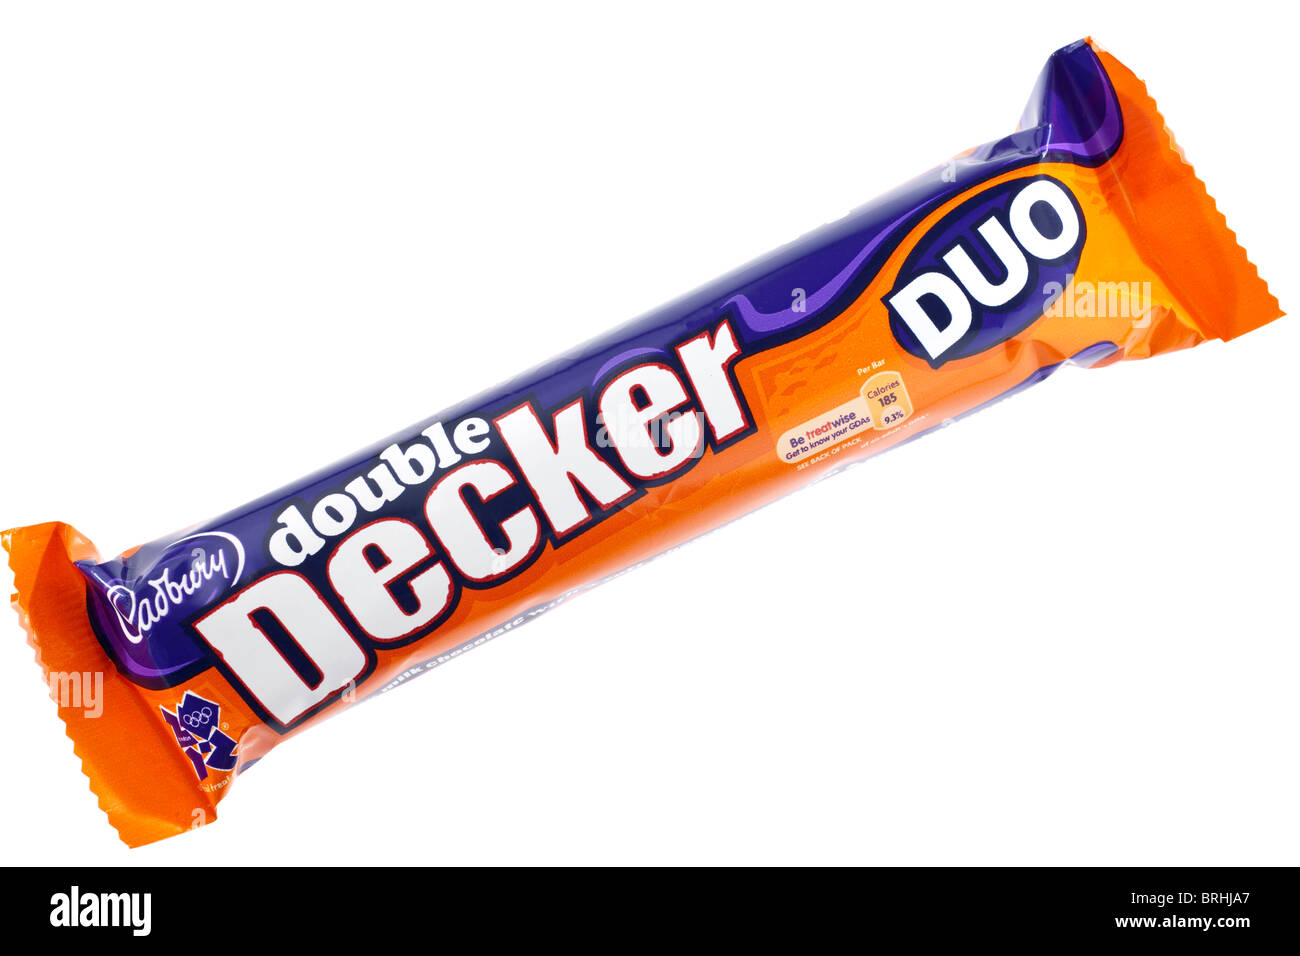 Cadbury double decker duo chocolate bar with wrapper Stock Photo